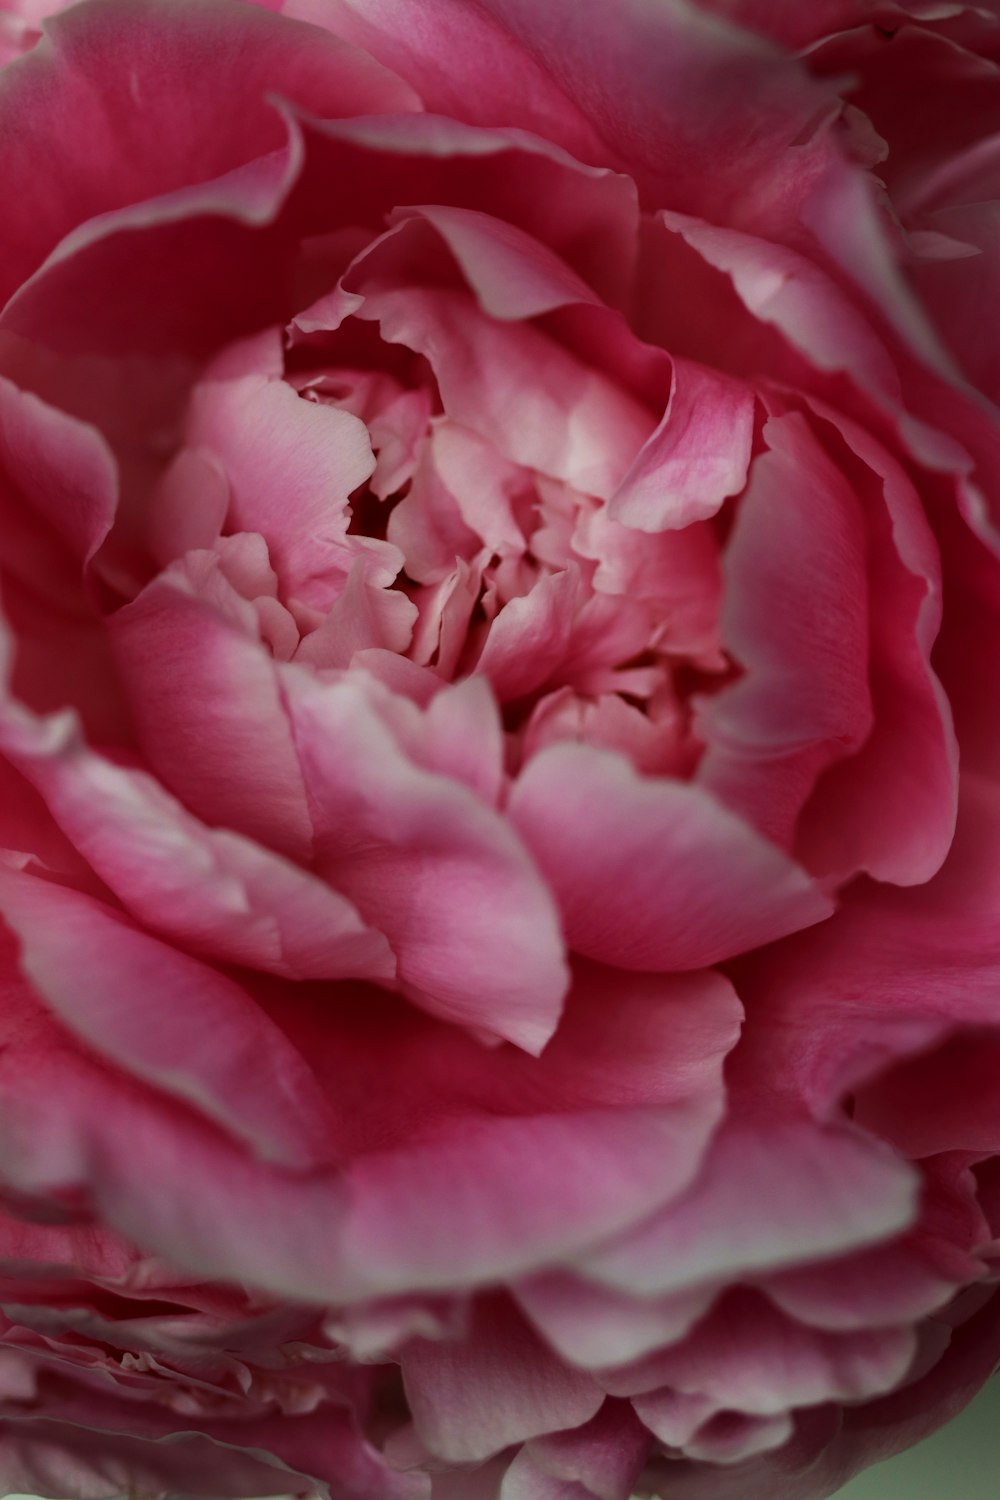 a close up of a pink rose